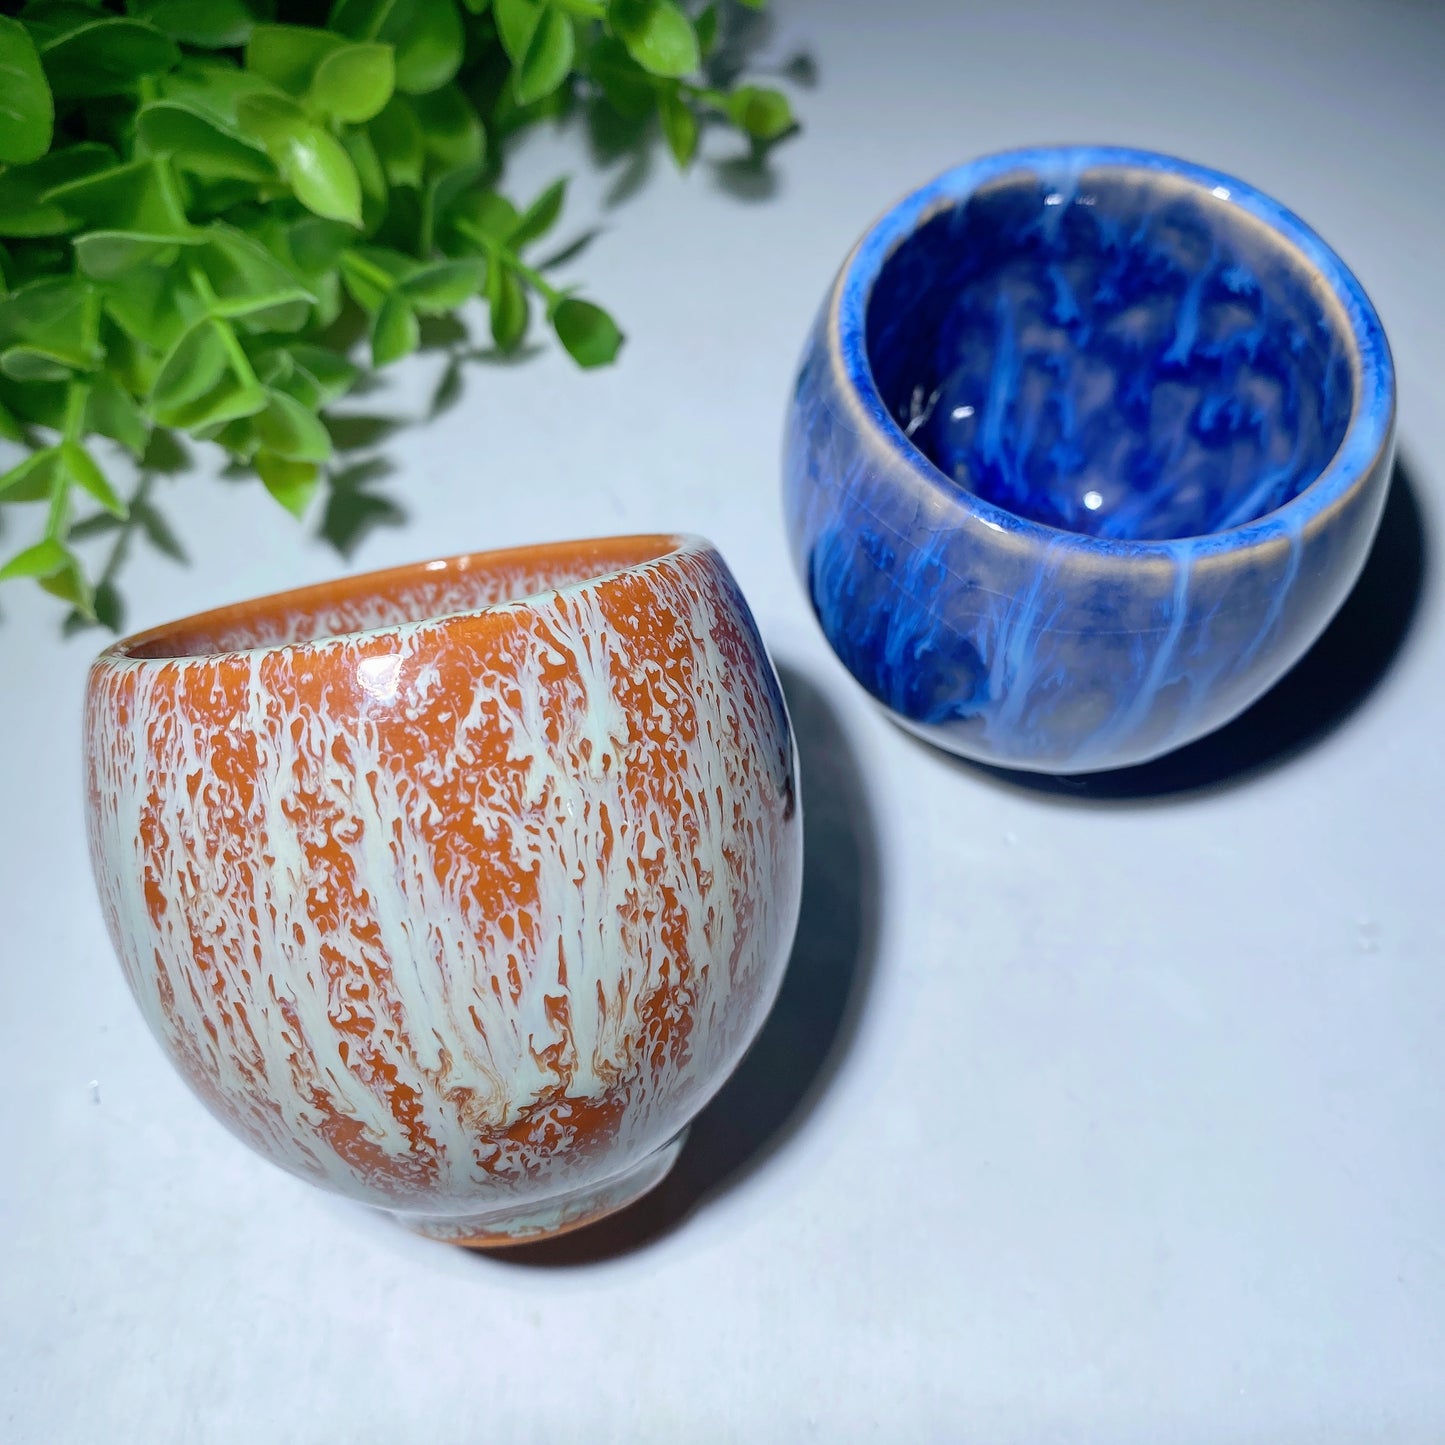 2.5" Ceramic Cup Bulk Wholesale